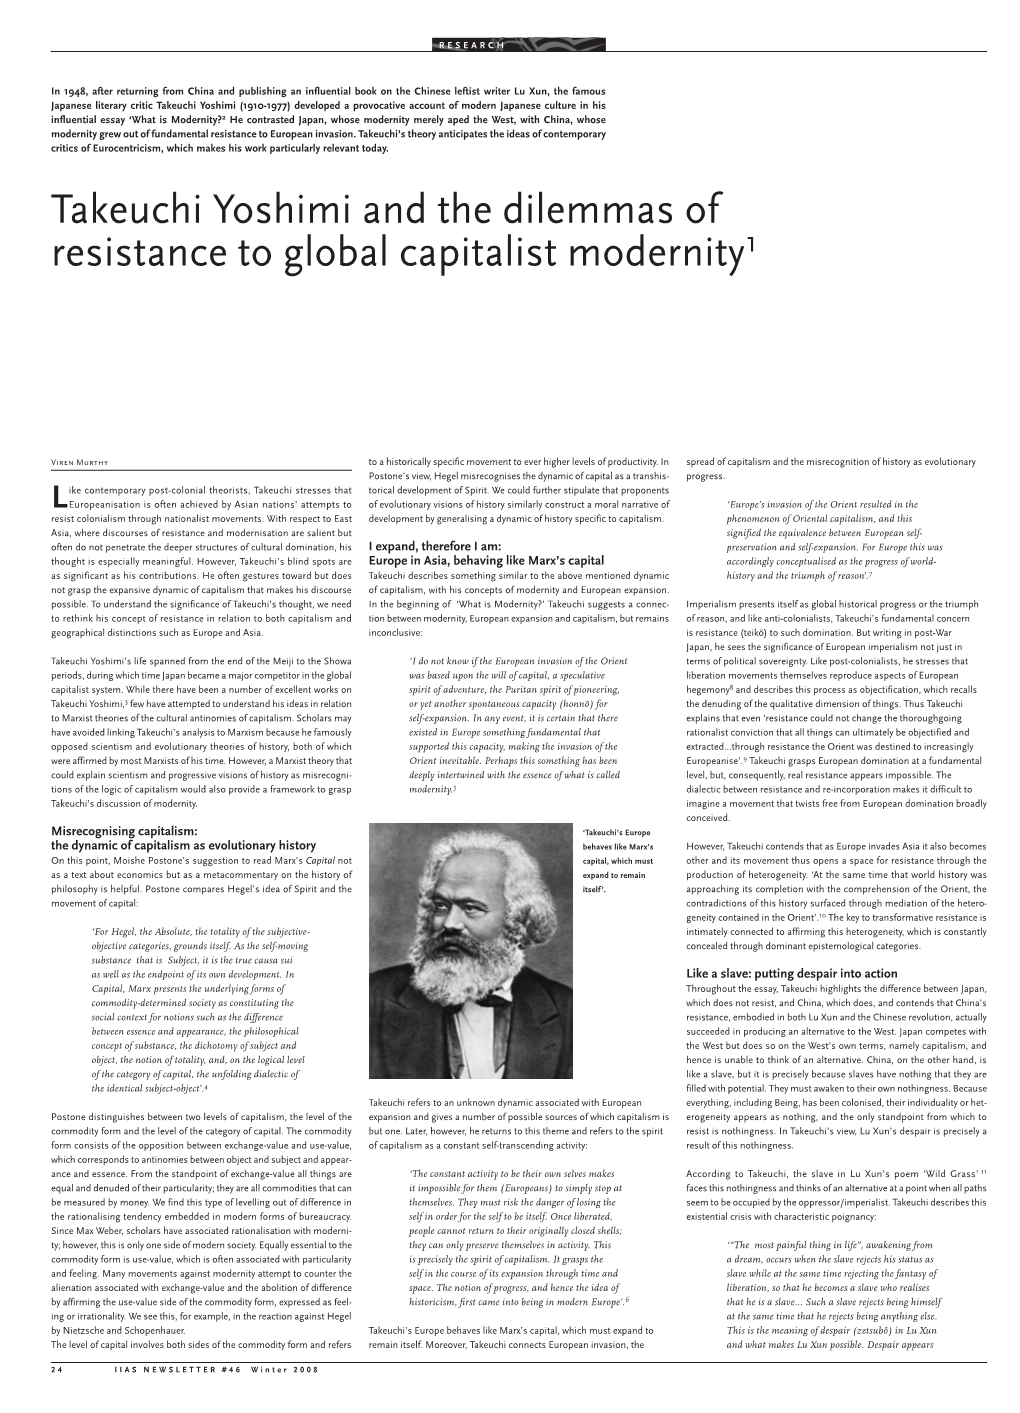 Takeuchi Yoshimi and the Dilemmas of Resistance to Global Capitalist Modernity1